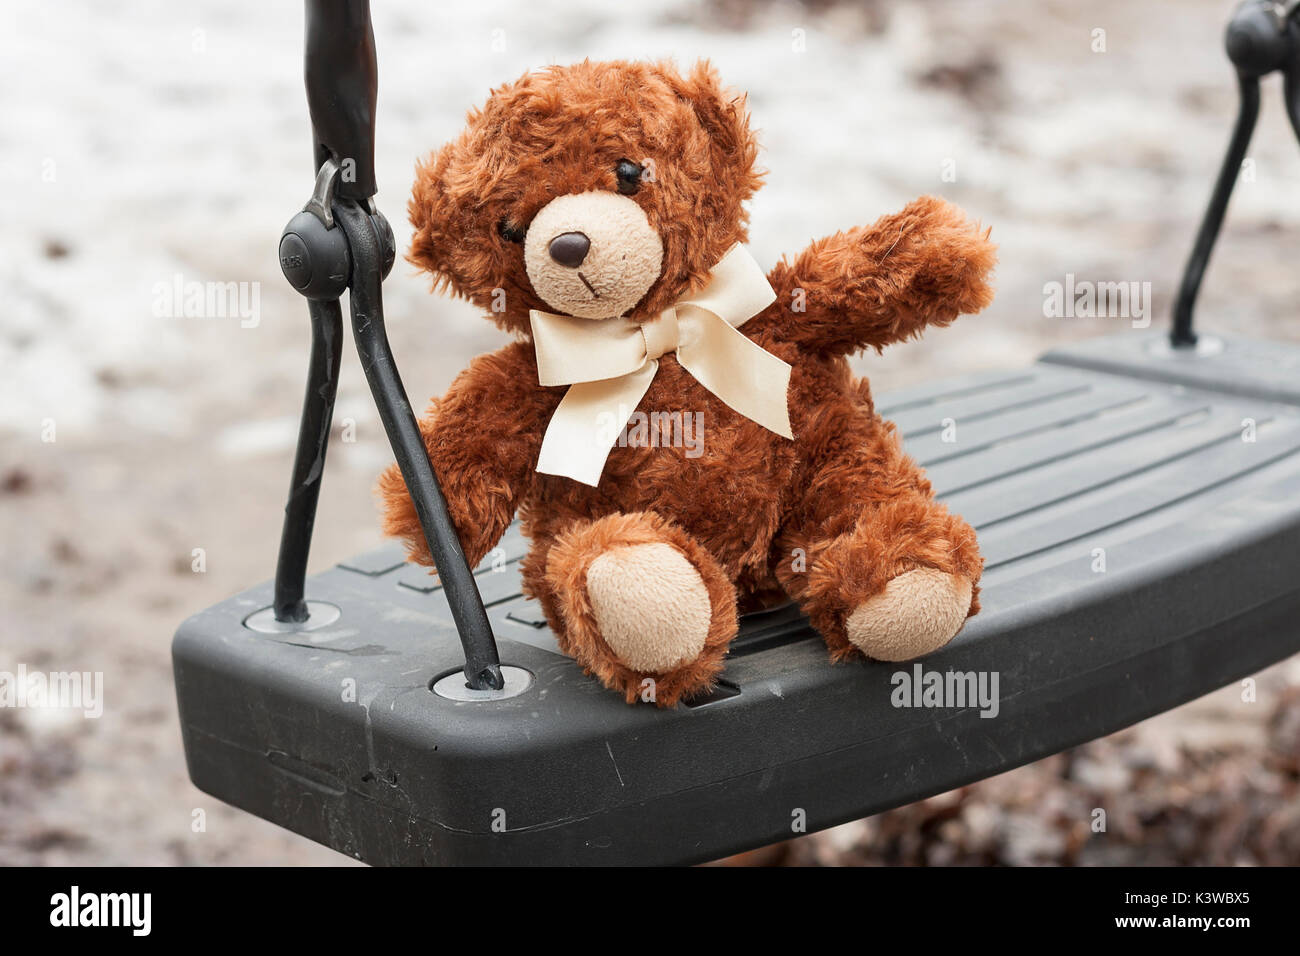 Braun Teddy Bär auf Schaukel Stockfotografie - Alamy